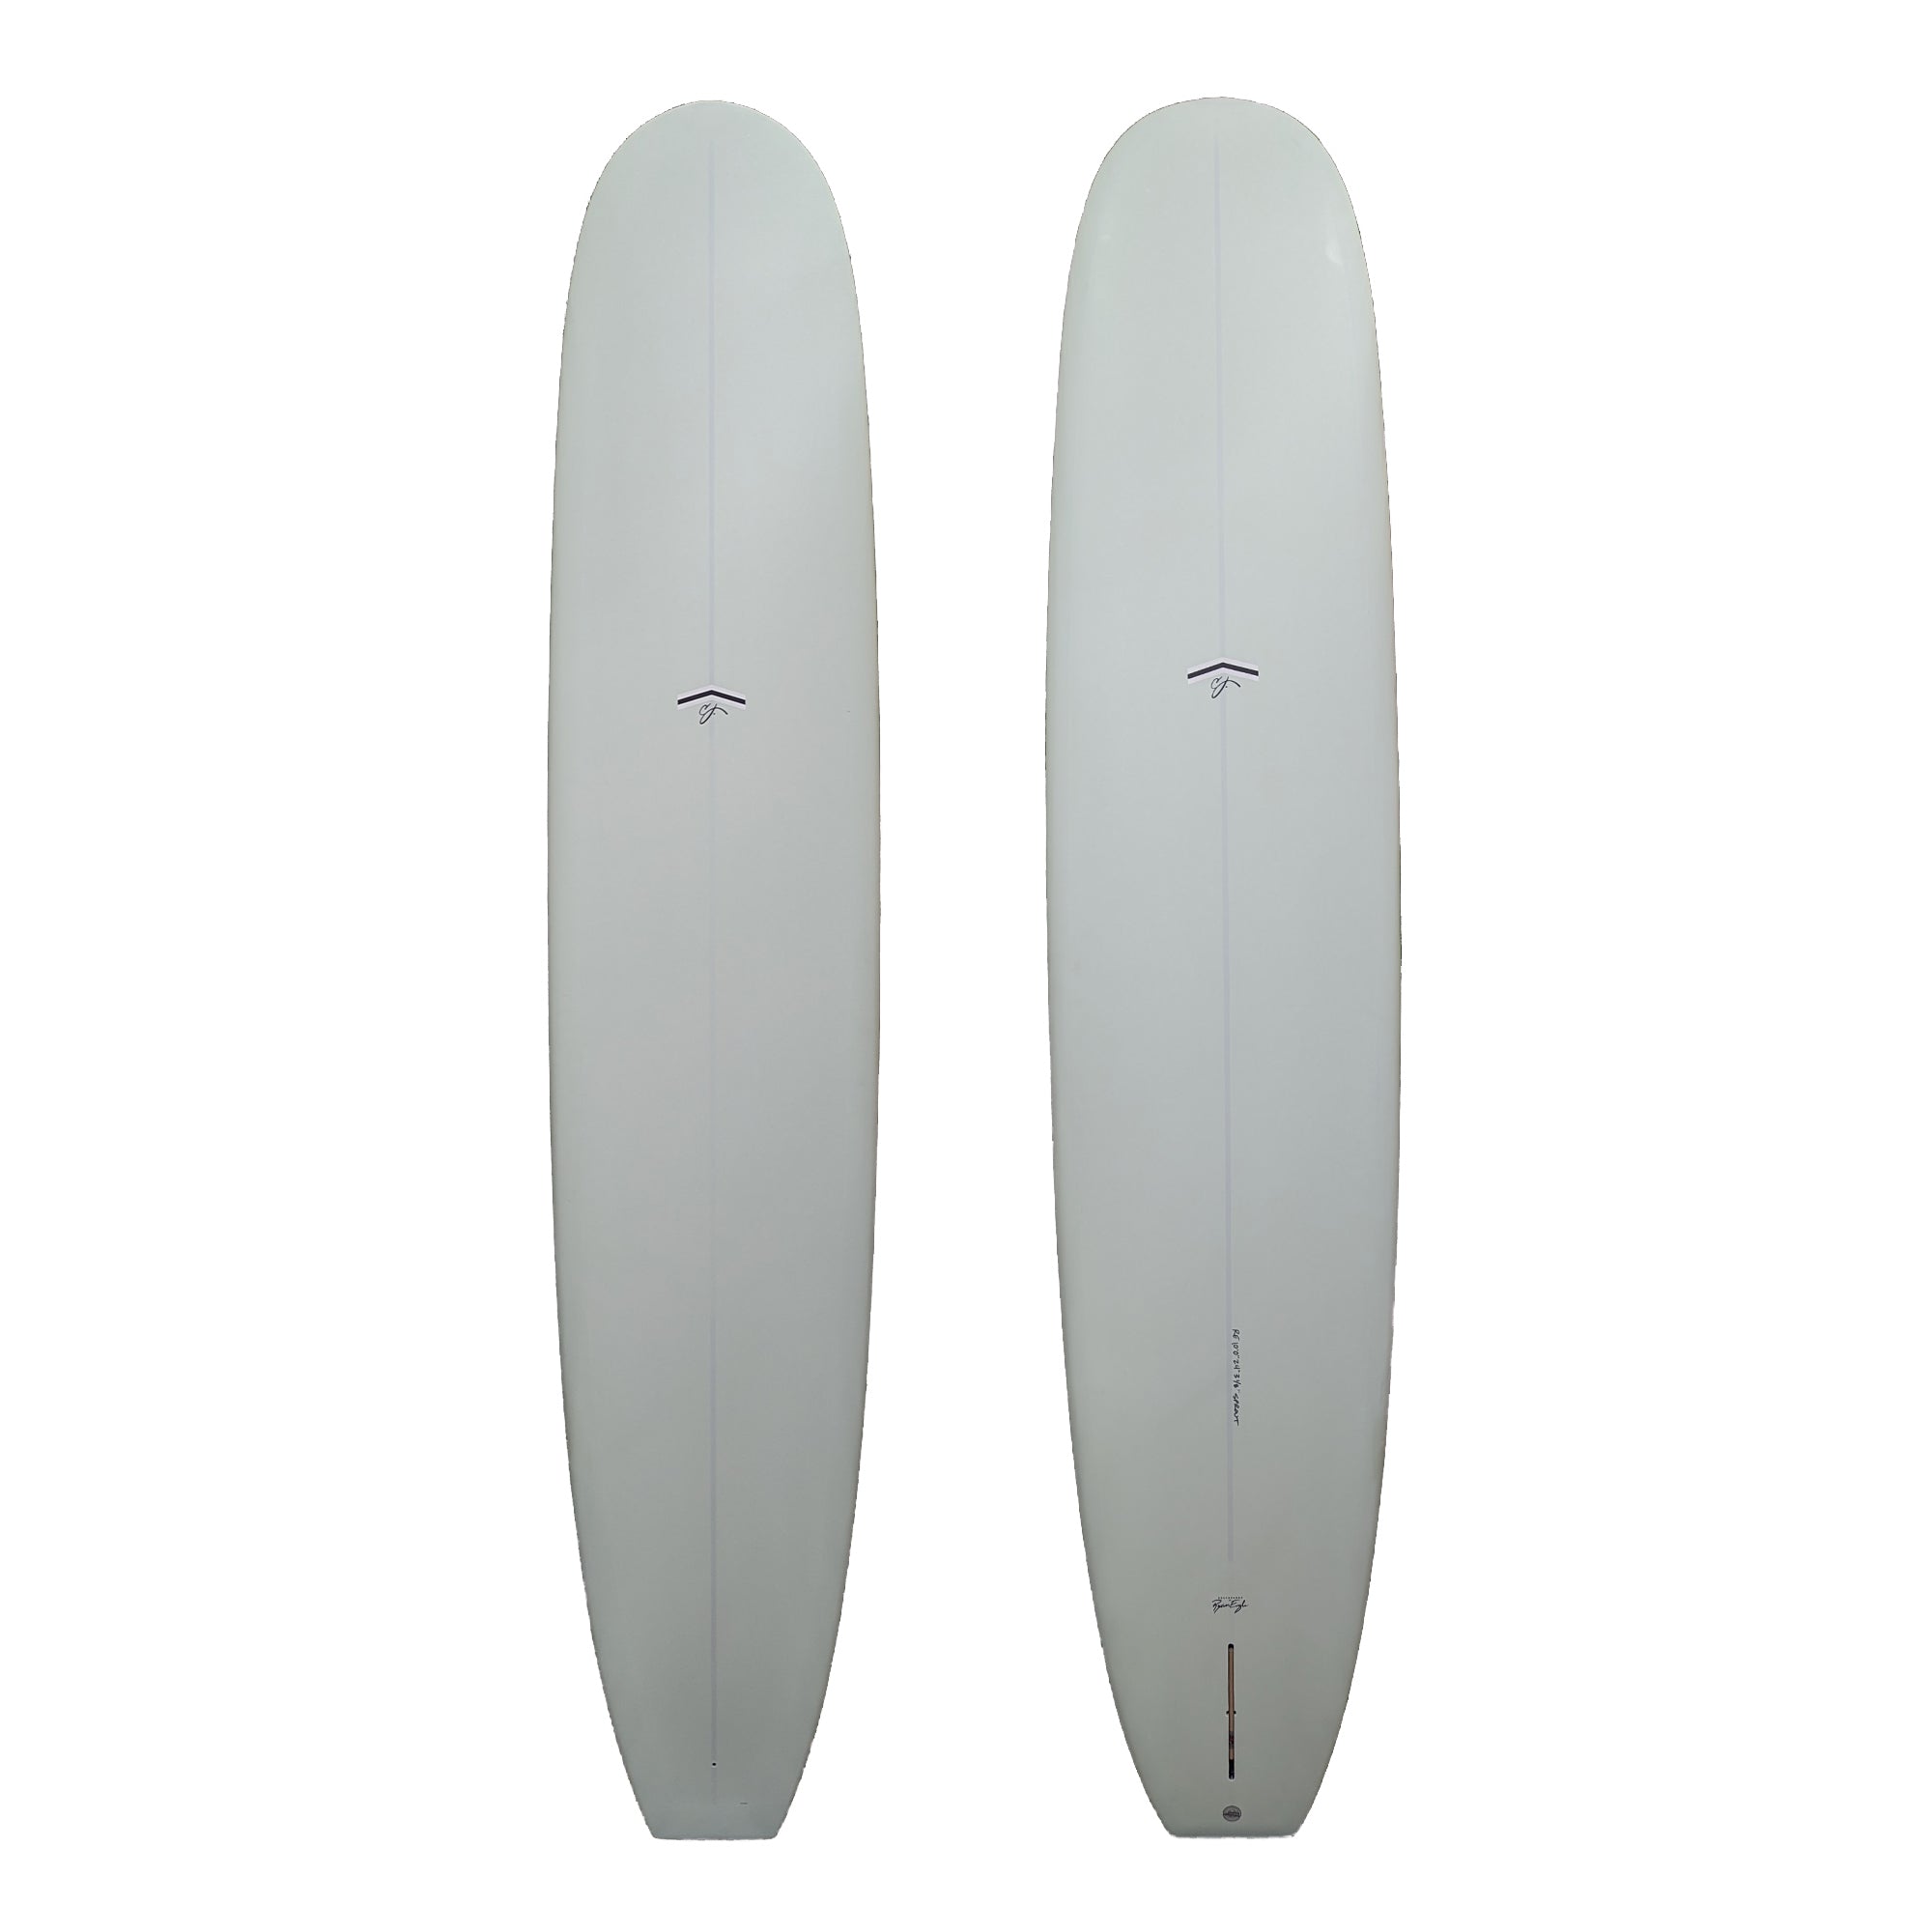 CJ Nelson Designs Sprout 10'0 Demo Surfboard